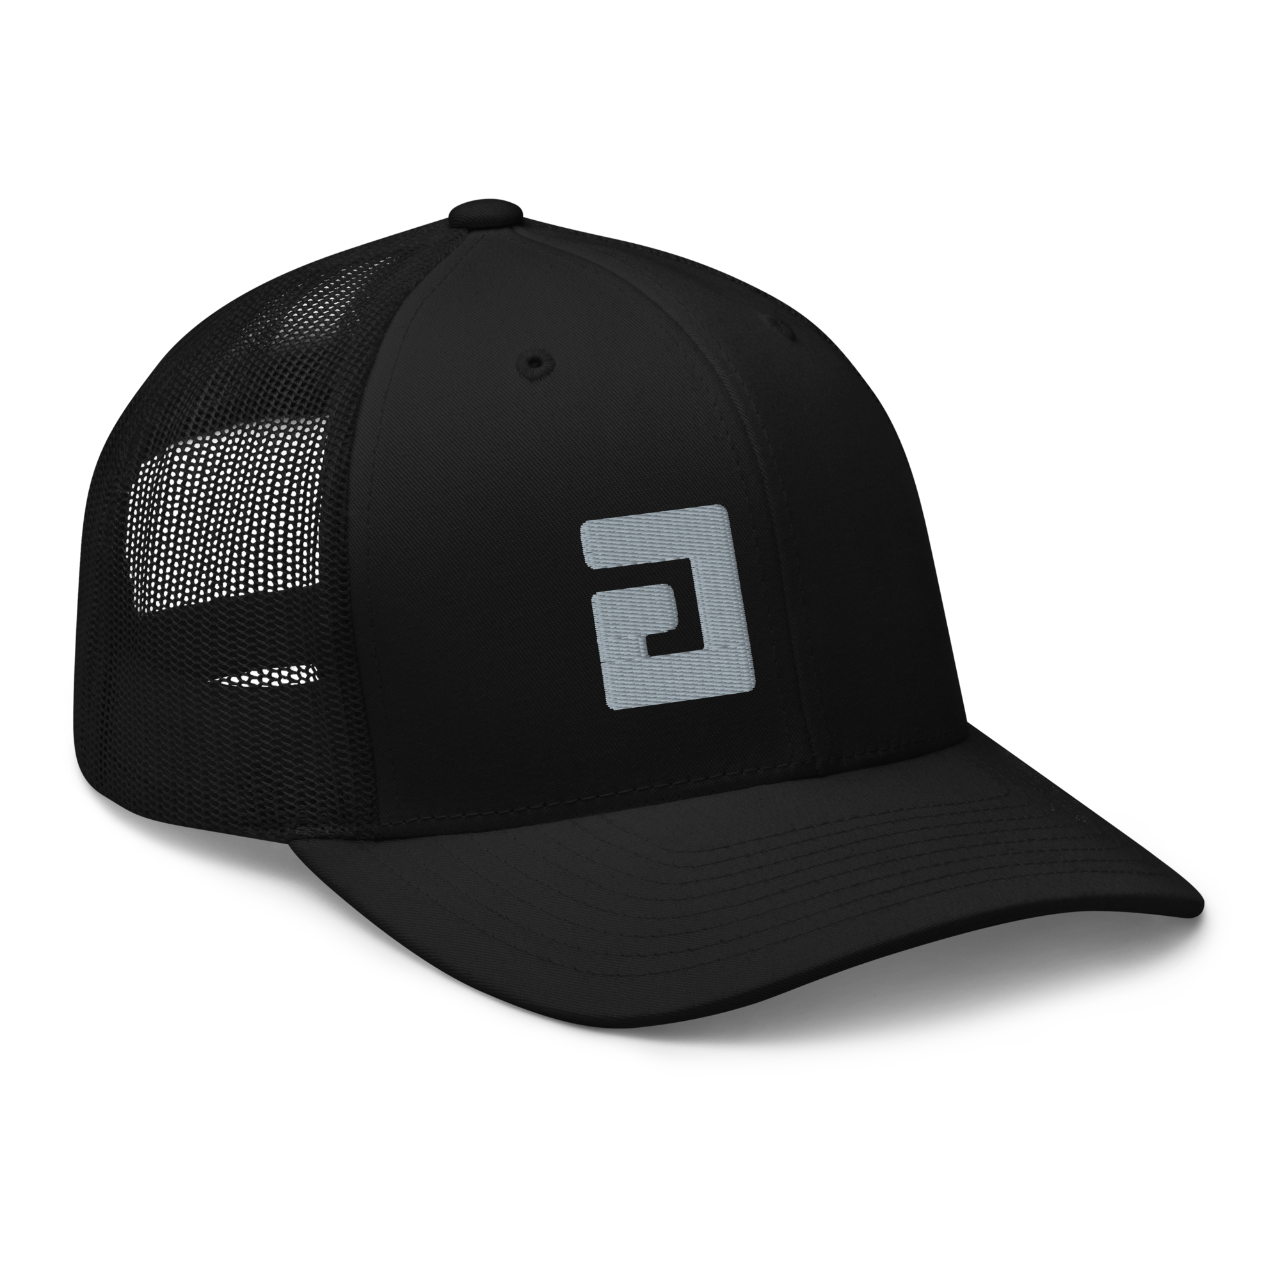 axsgtr axess electronics guitar music industry branded merchandise swag trucker cap hat black grey